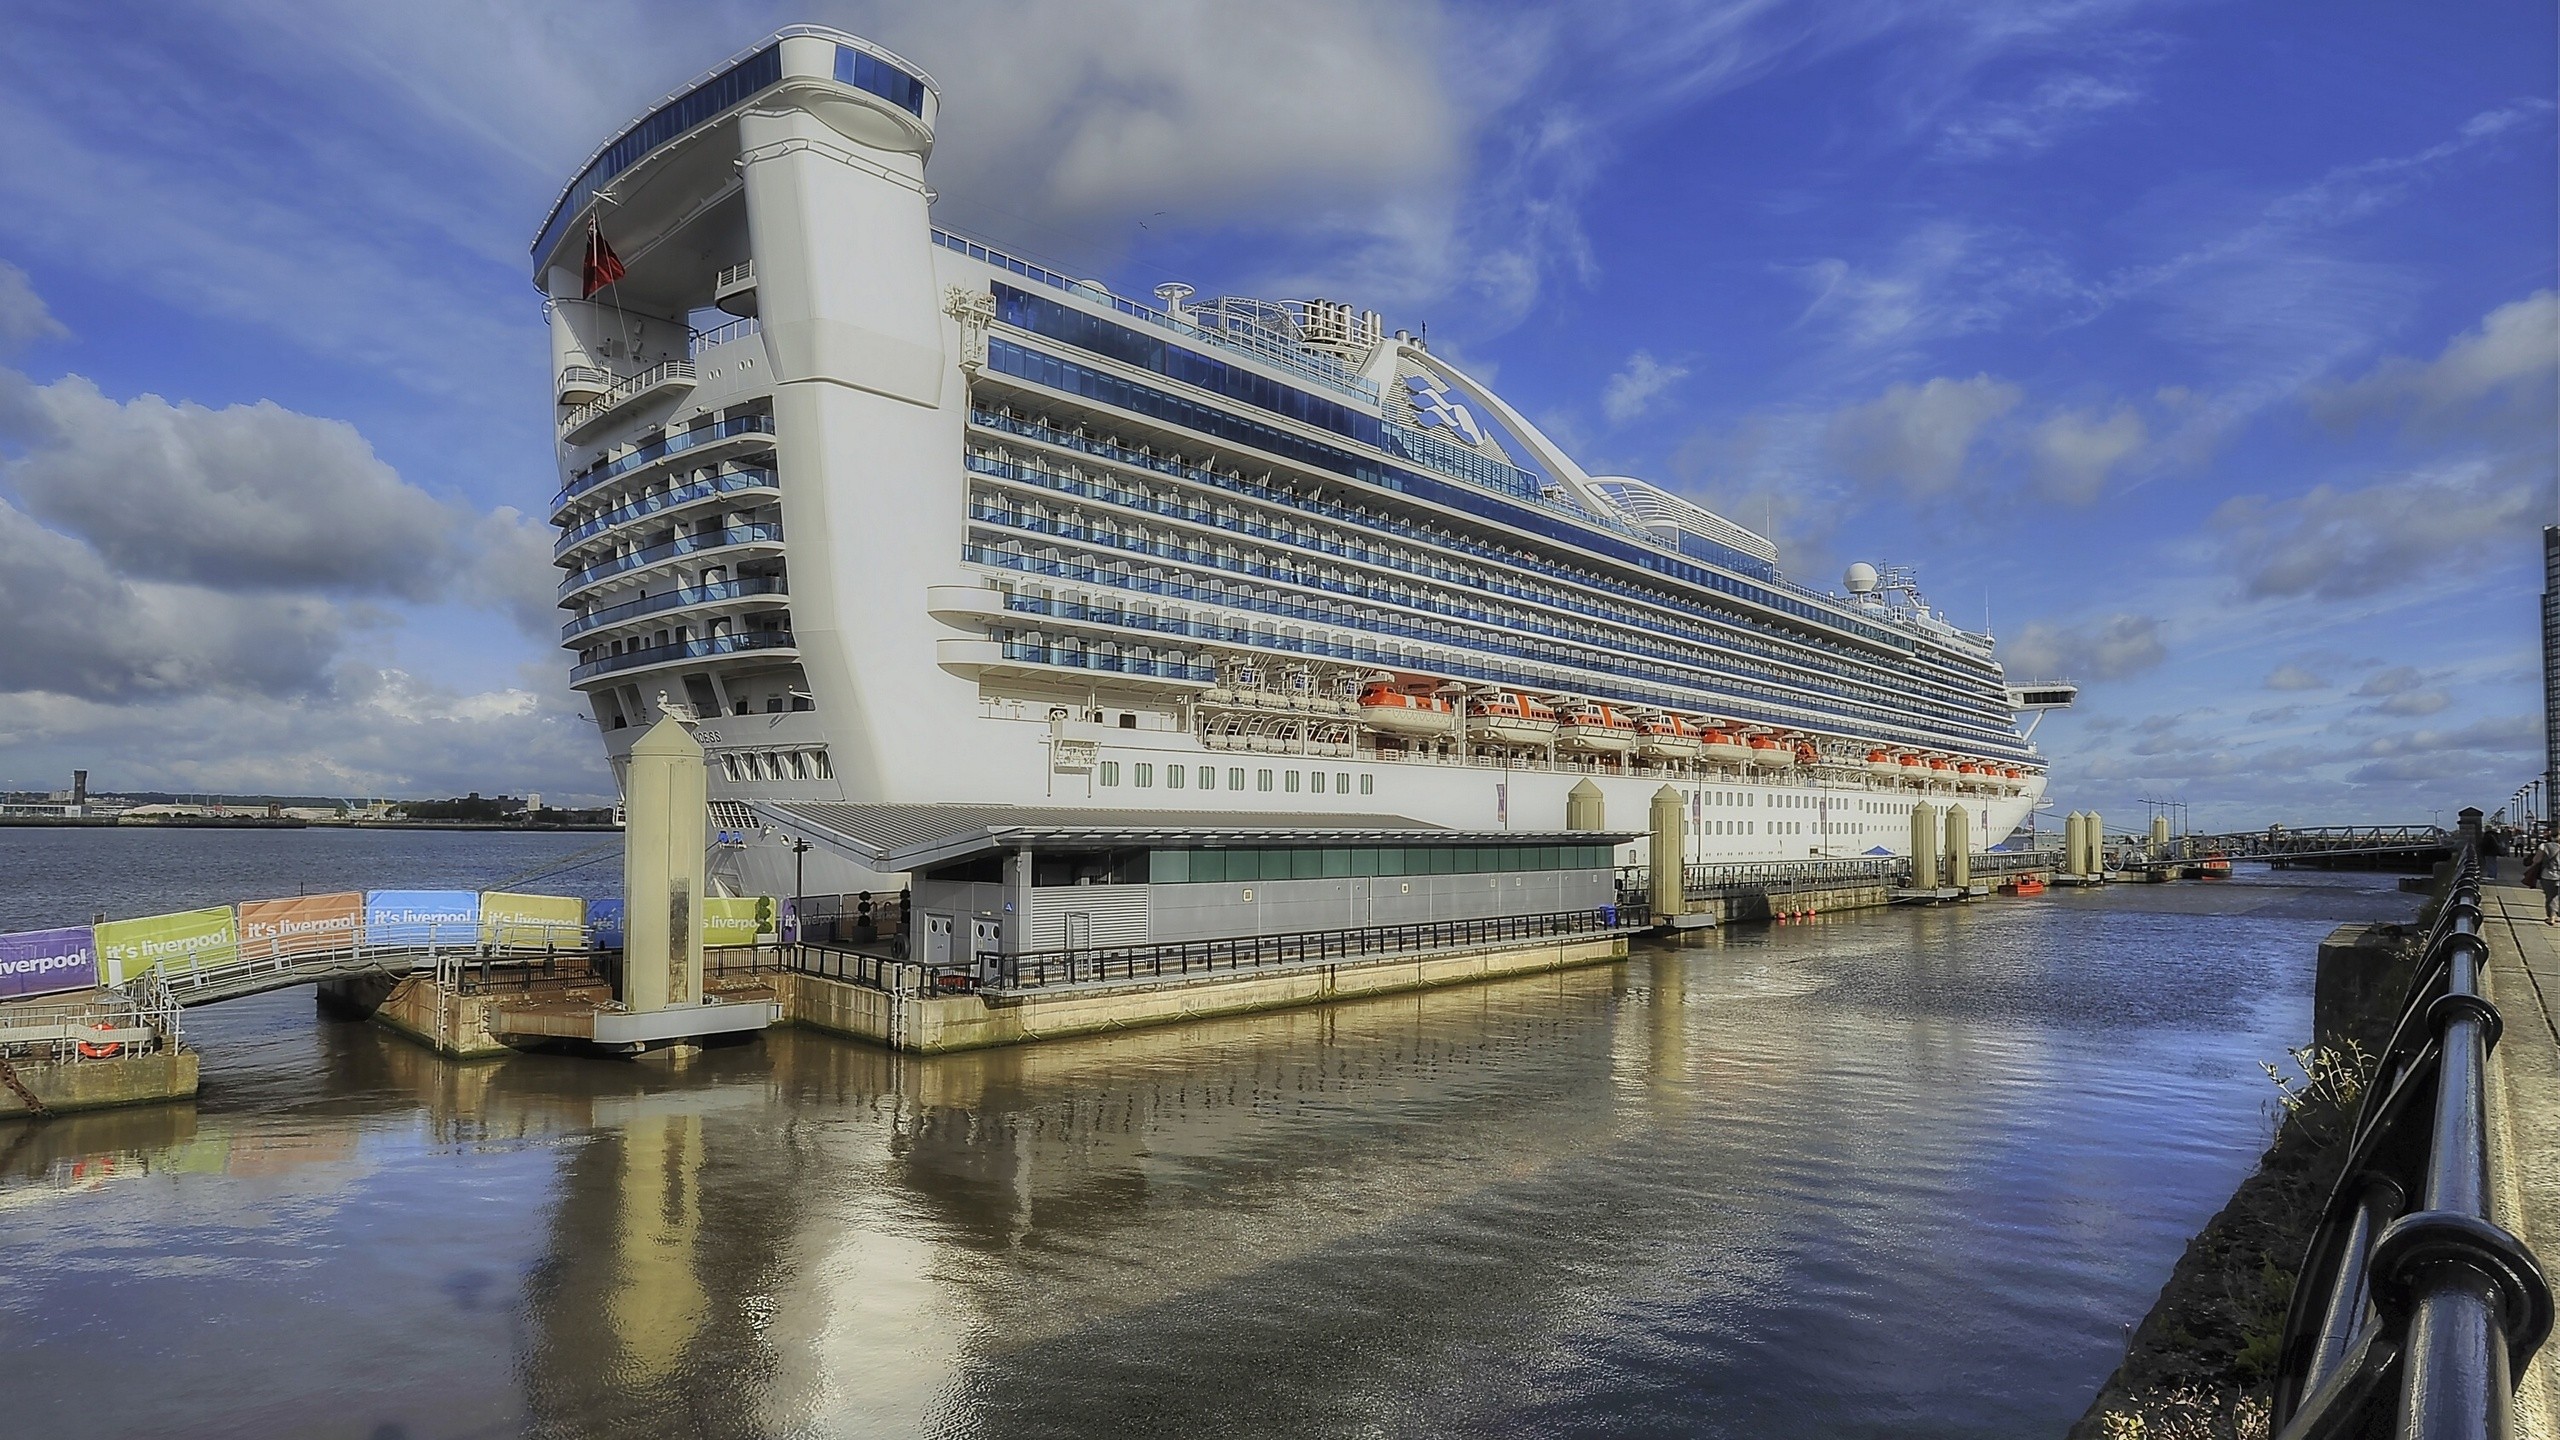 Cruise Ship Caribbean Princess Liverpool 2560x1440